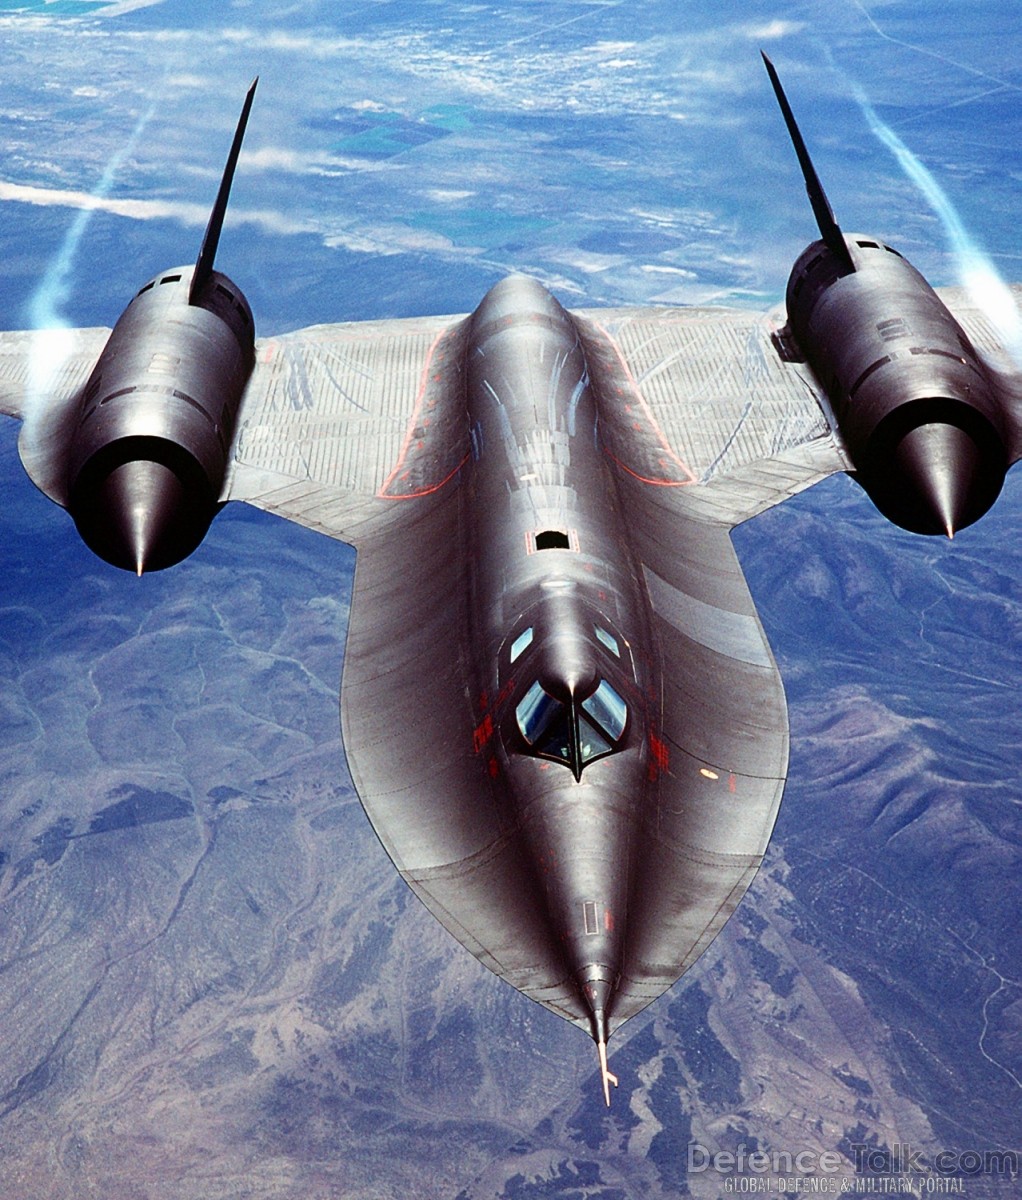 USAF SR-71 Blackbird Long-Range Strategic Reconnaissance Aircraft